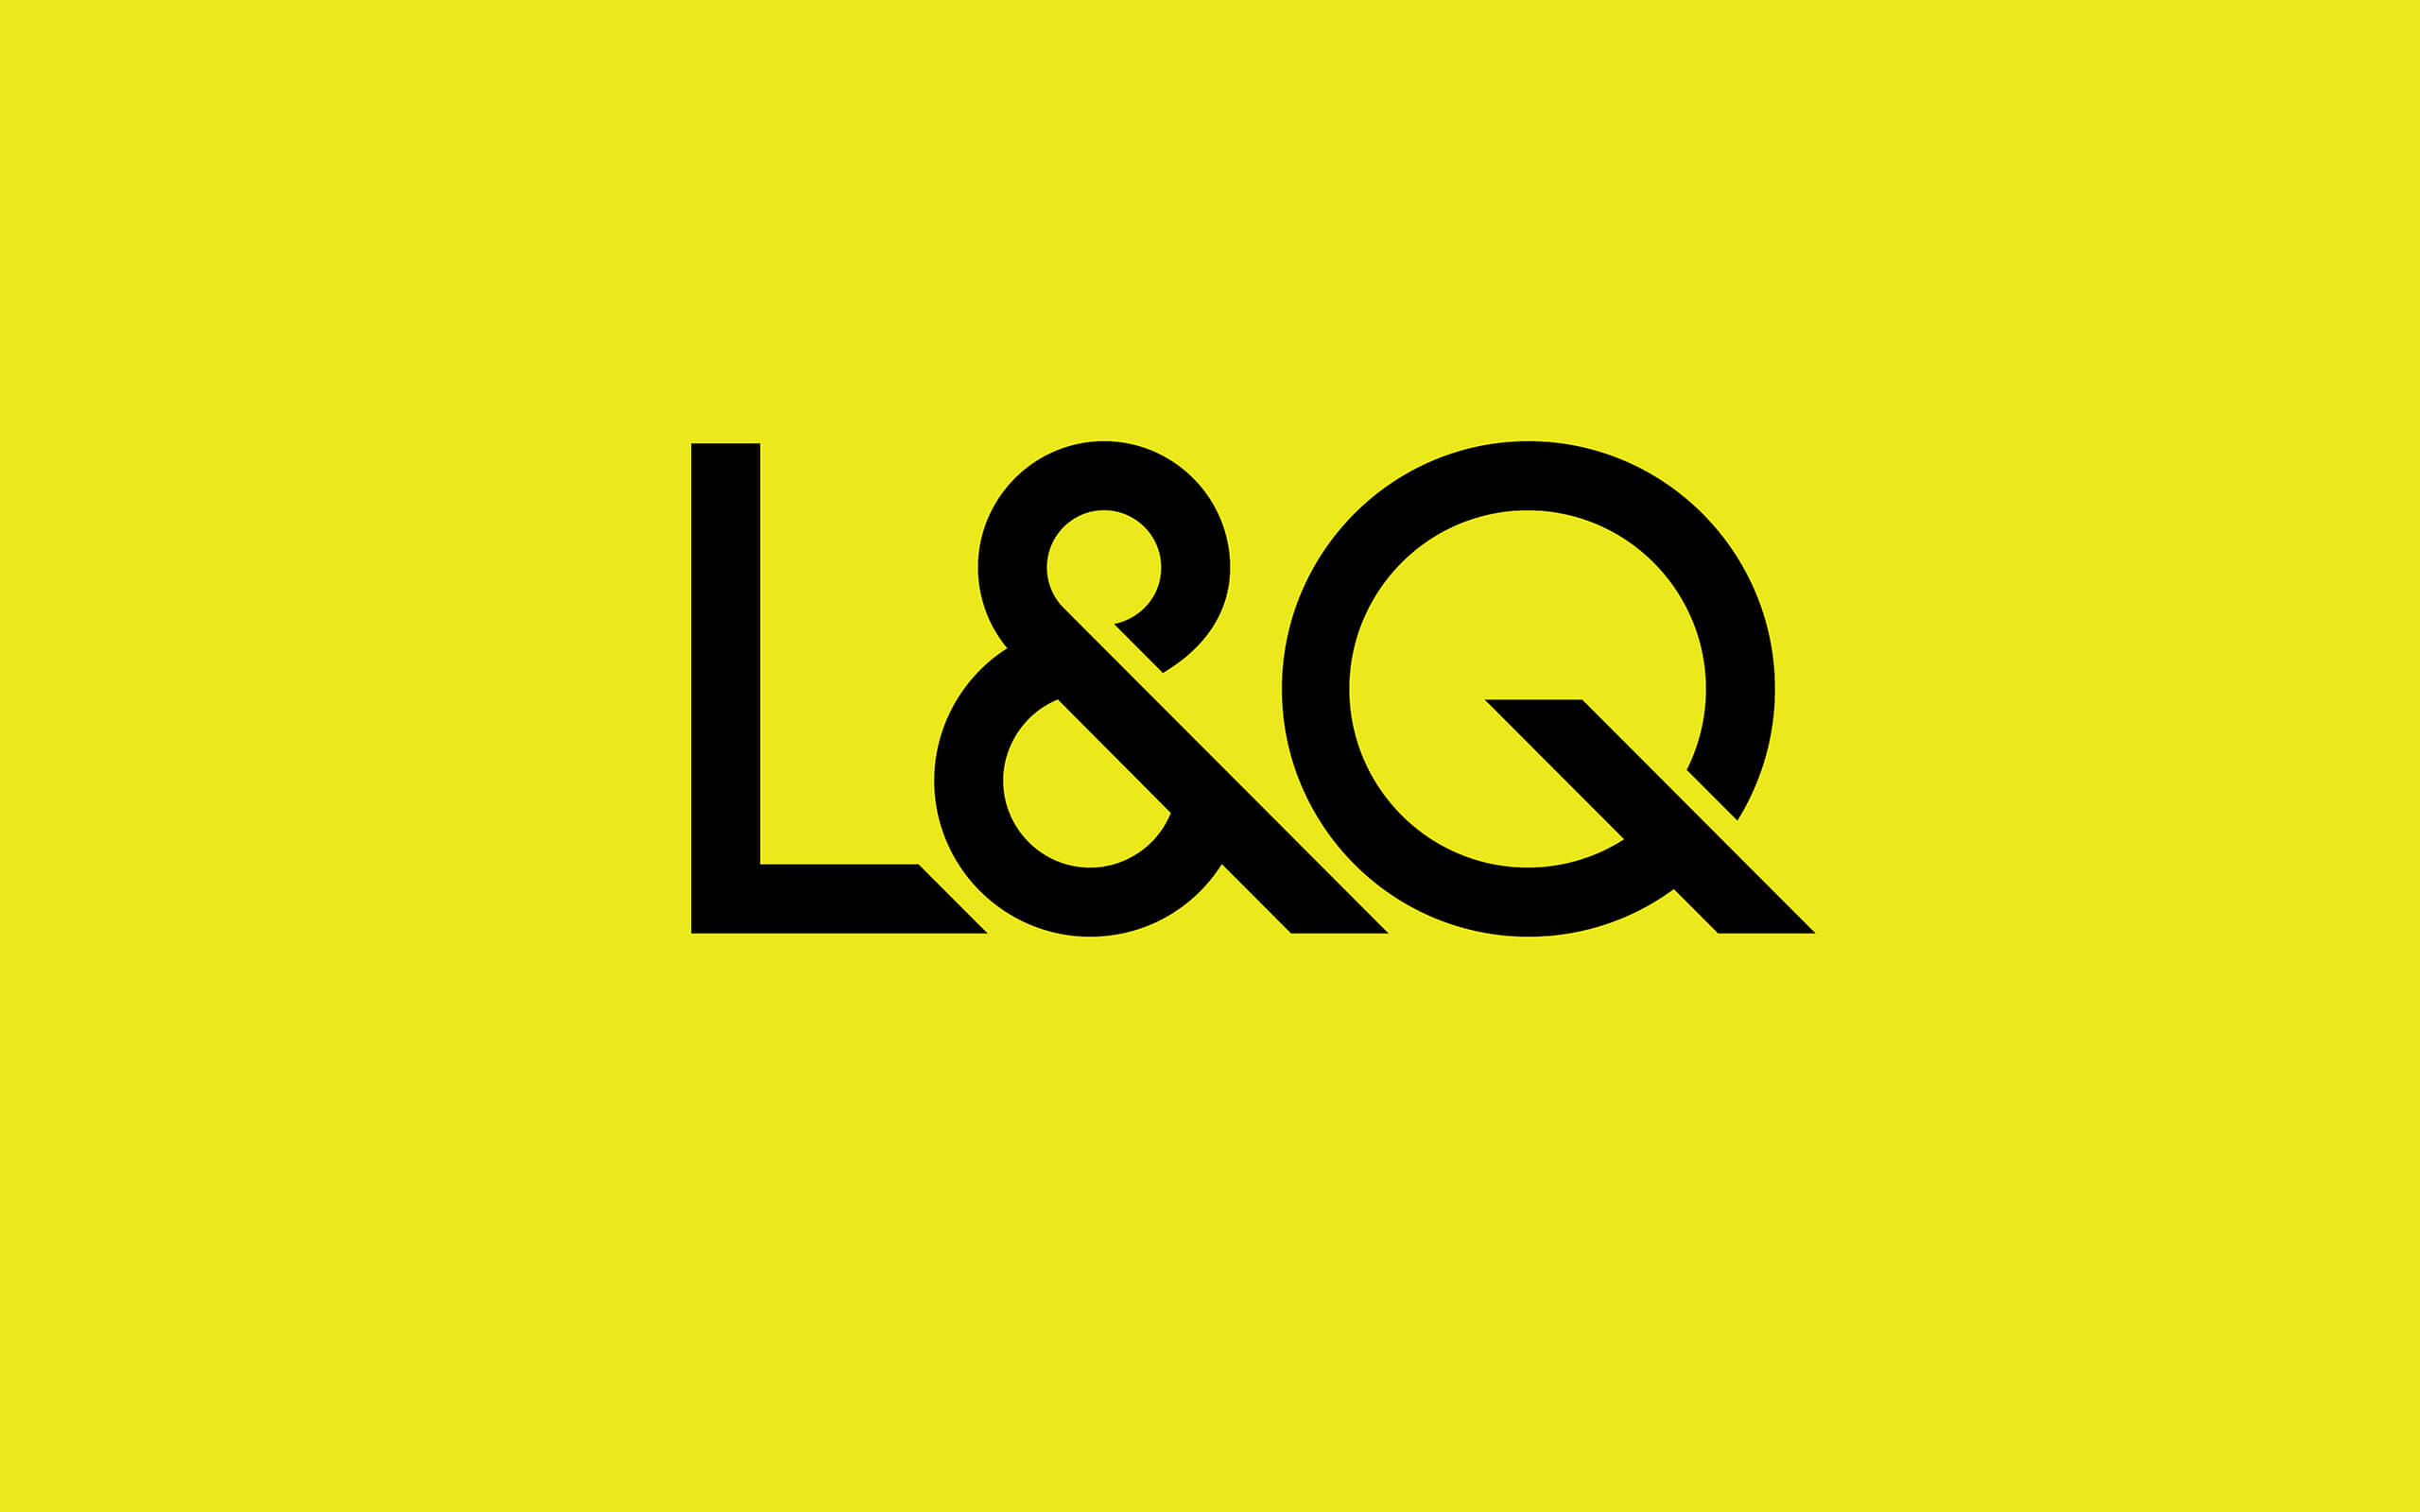 L&Q residential brand logo